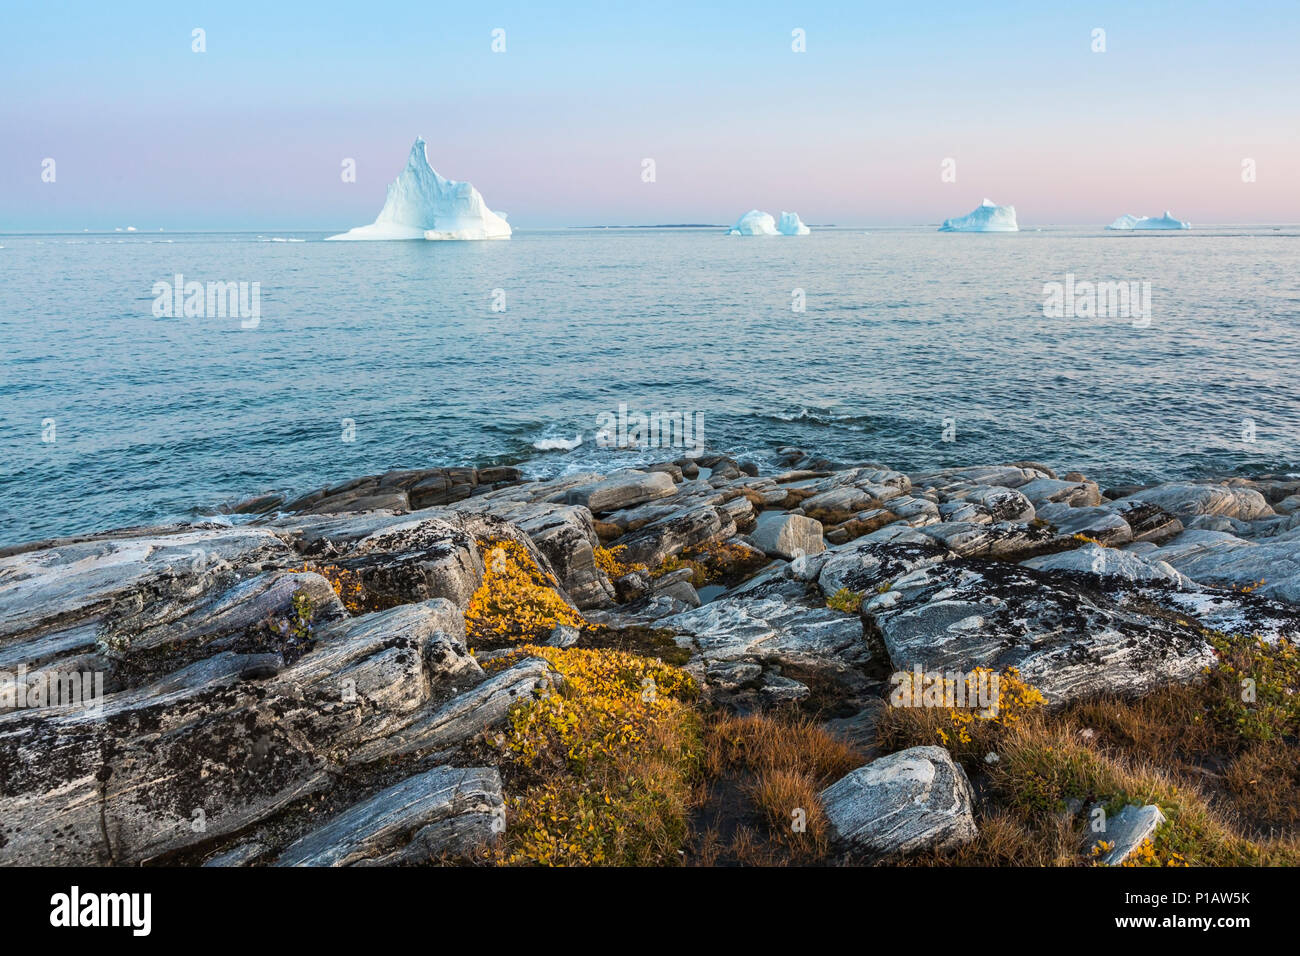 Icebergs in tranquil ocean, Disko Island, Greenland Stock Photo